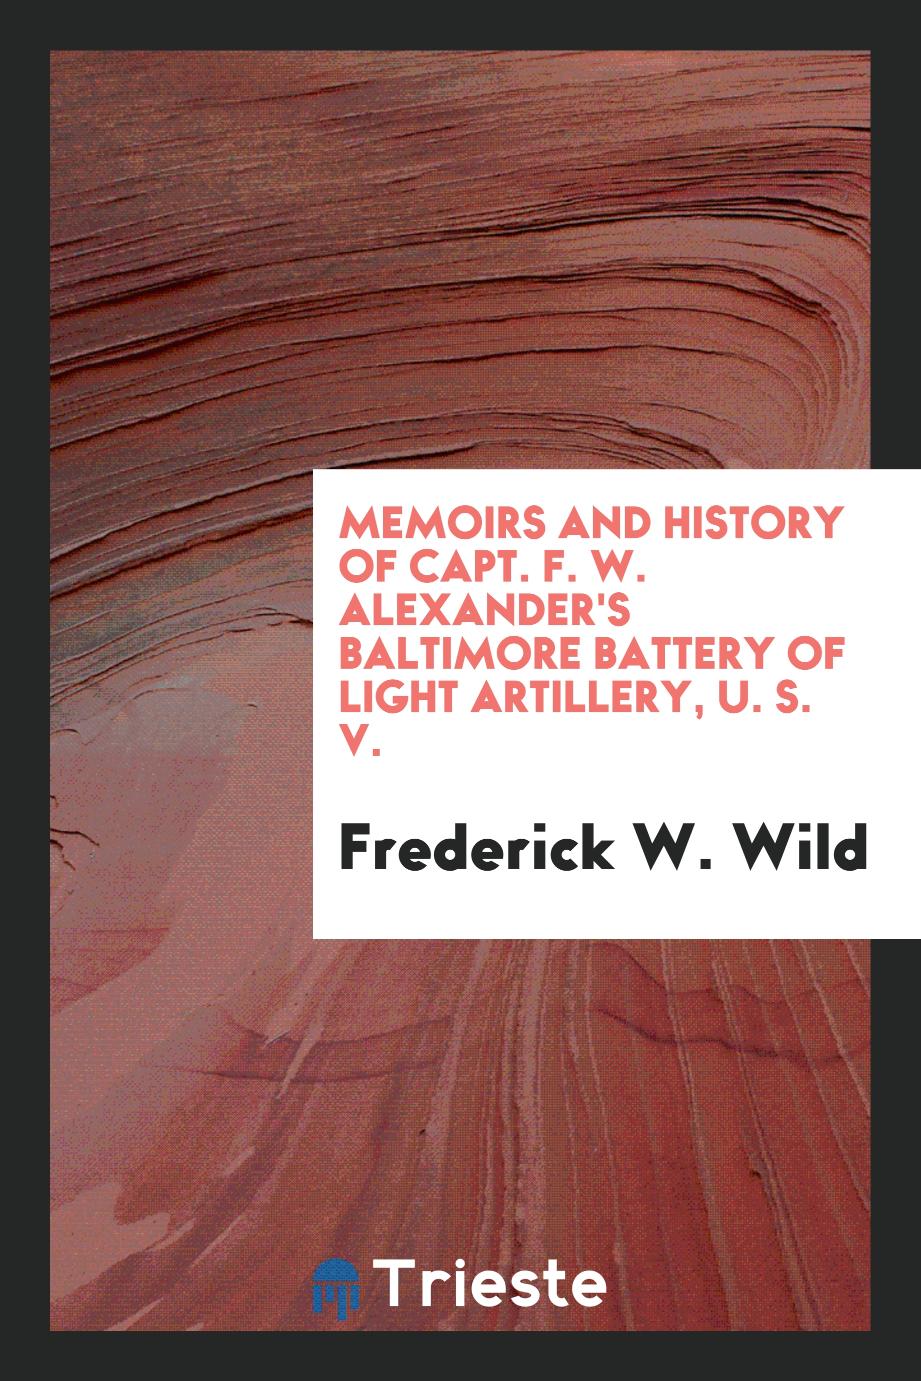 Memoirs and history of Capt. F. W. Alexander's Baltimore Battery of light artillery, U. S. V.